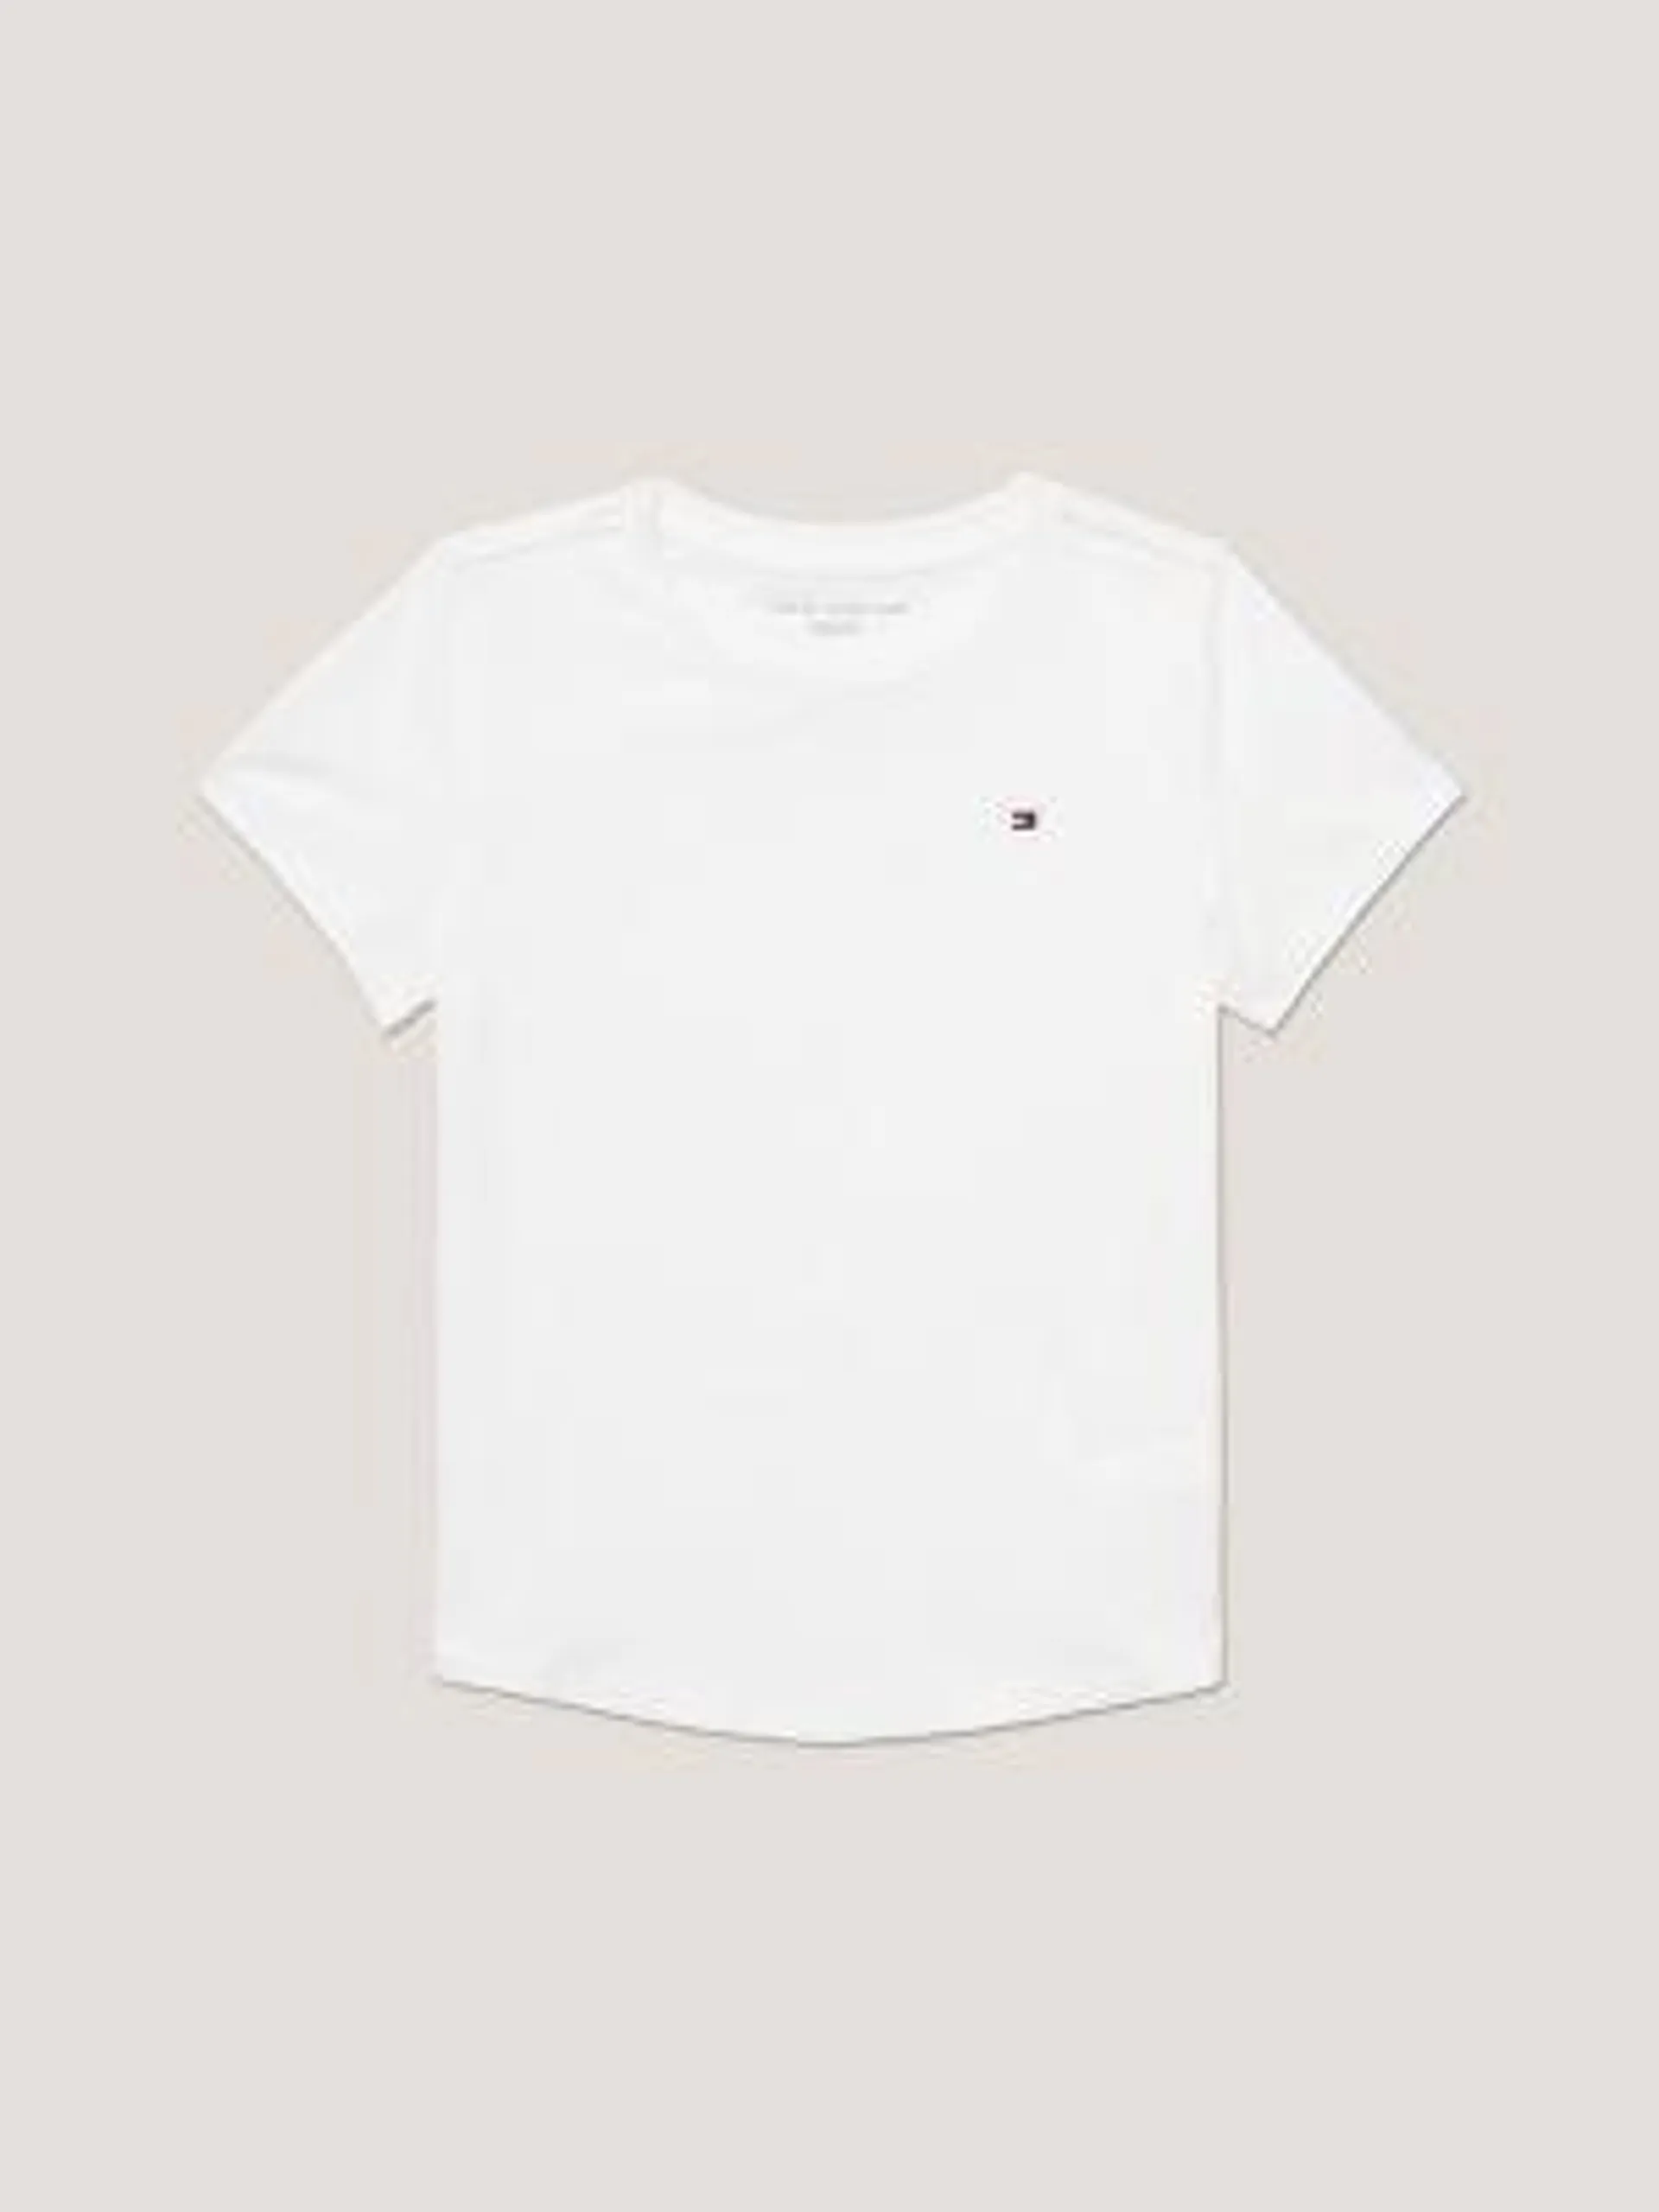 Kids' Solid Cotton T-Shirt